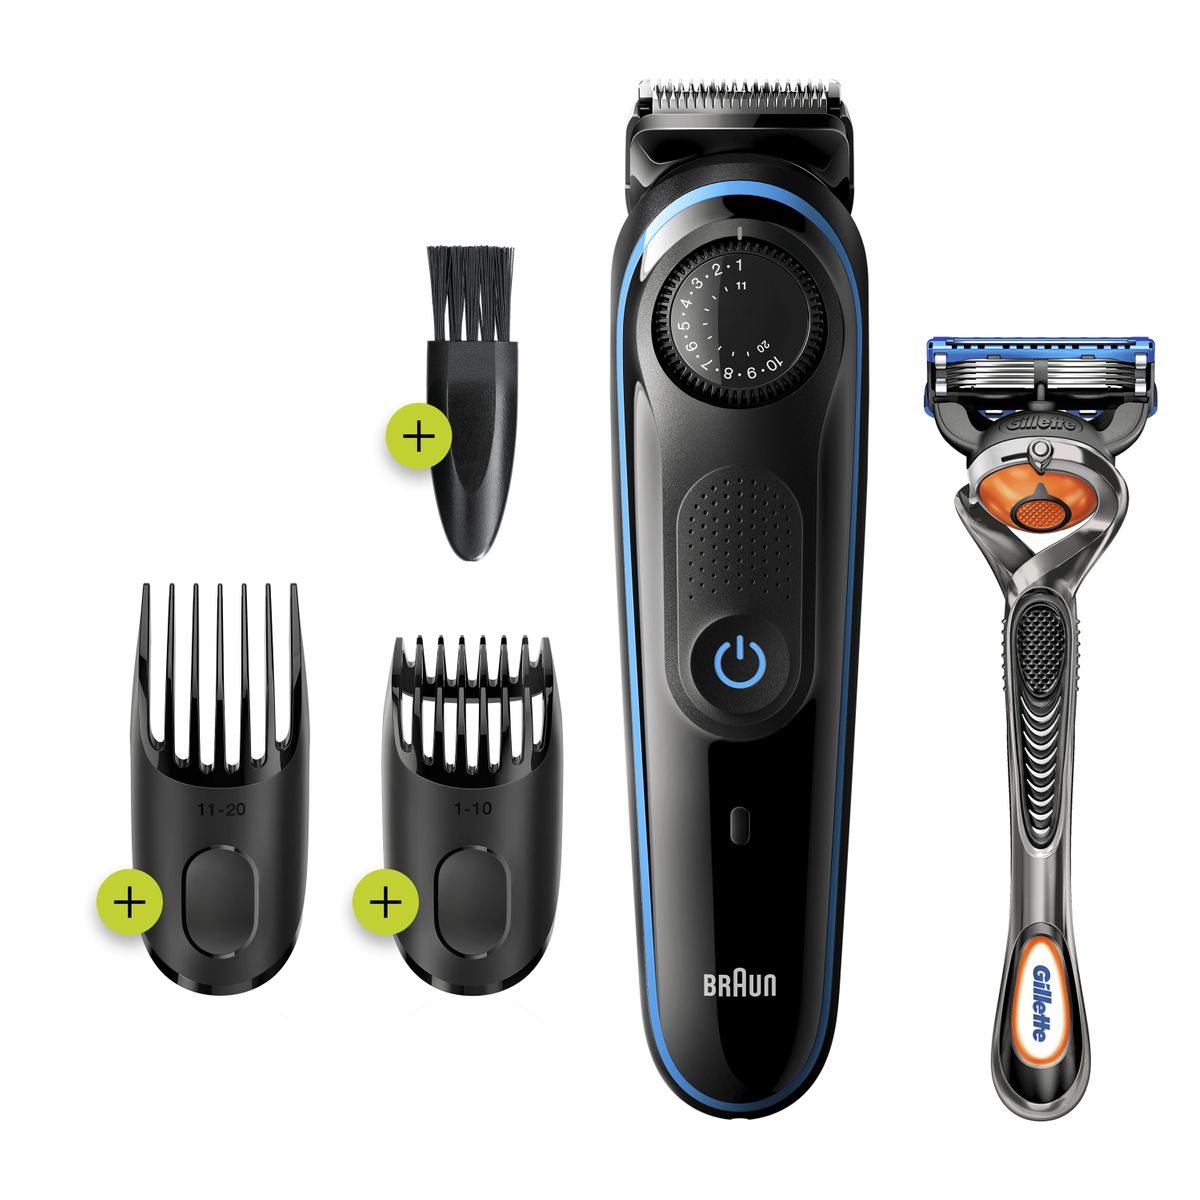 Braun - 81705178 - BT3240 Beard and hair trimmer, 39 length settings, black/blue